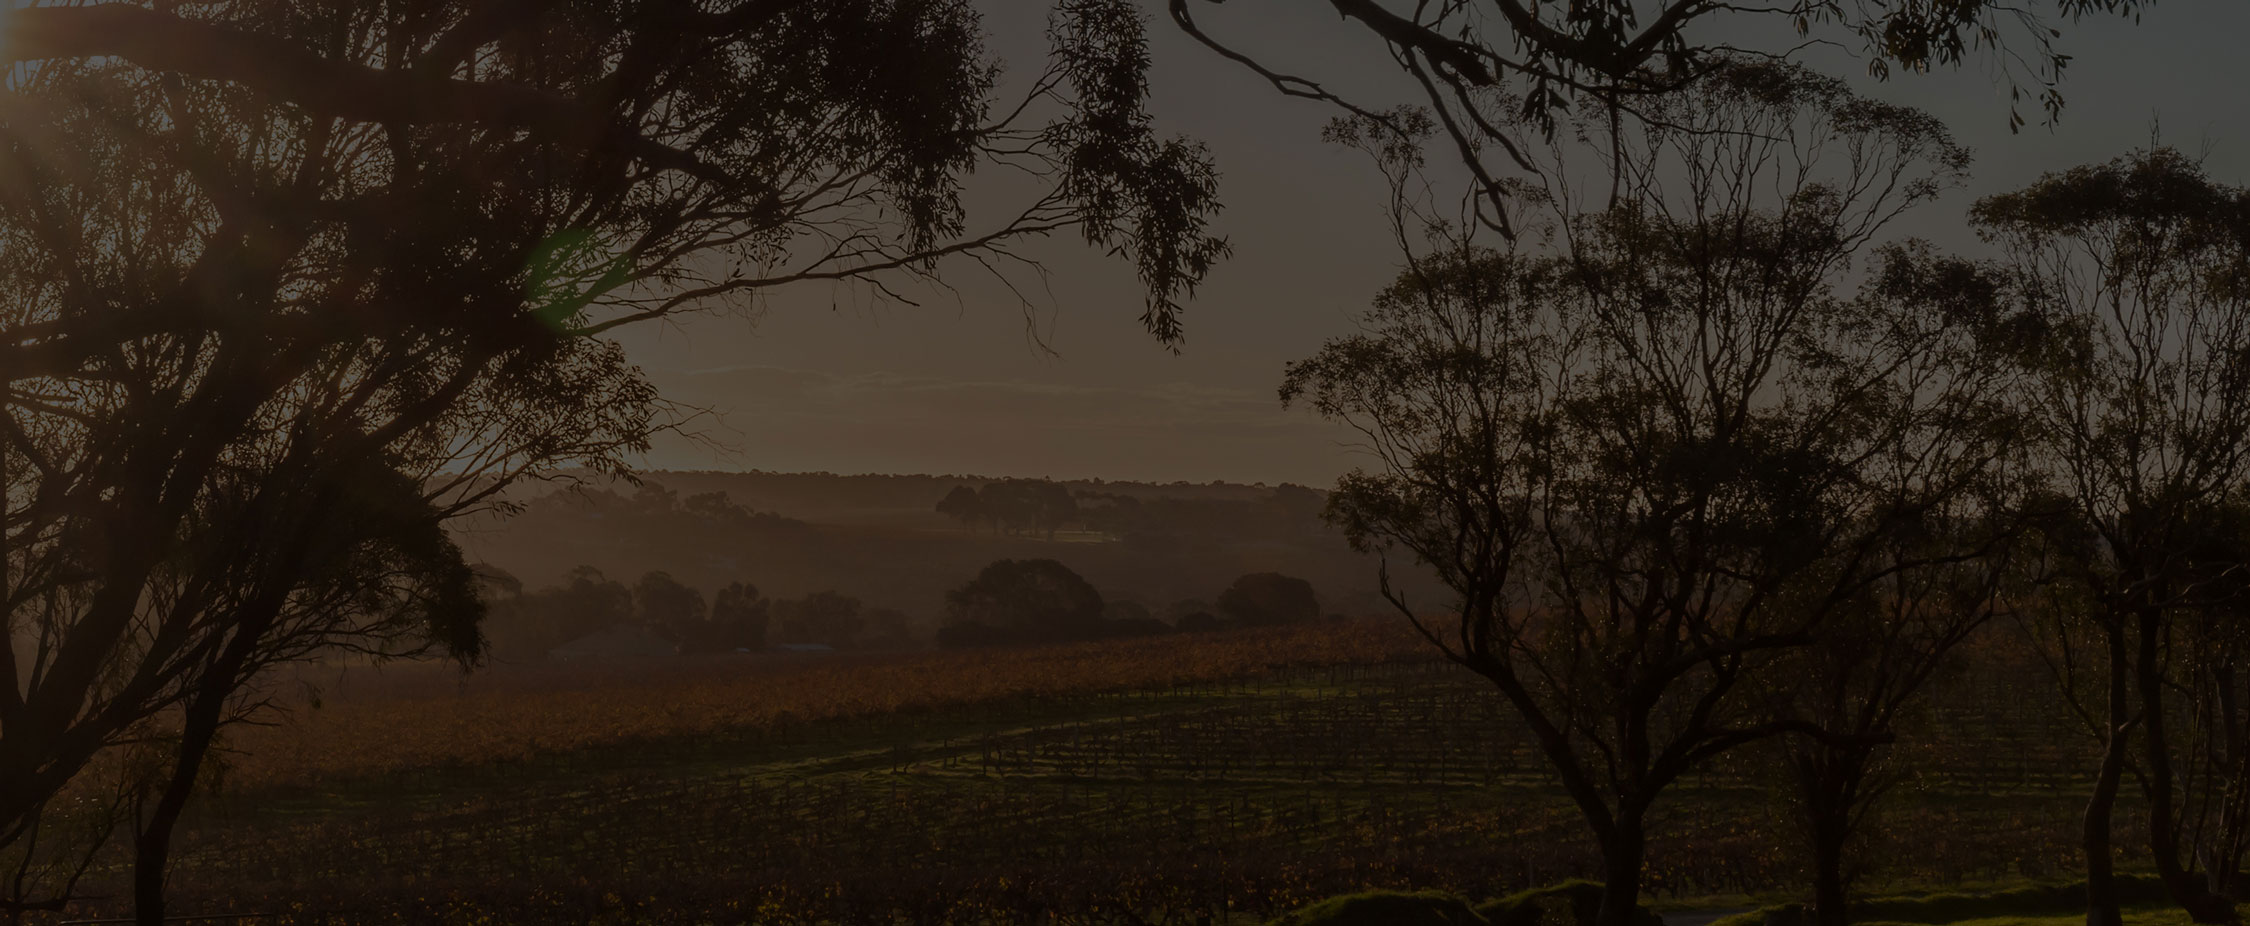 A landscape image of a wine vineyard at sunset